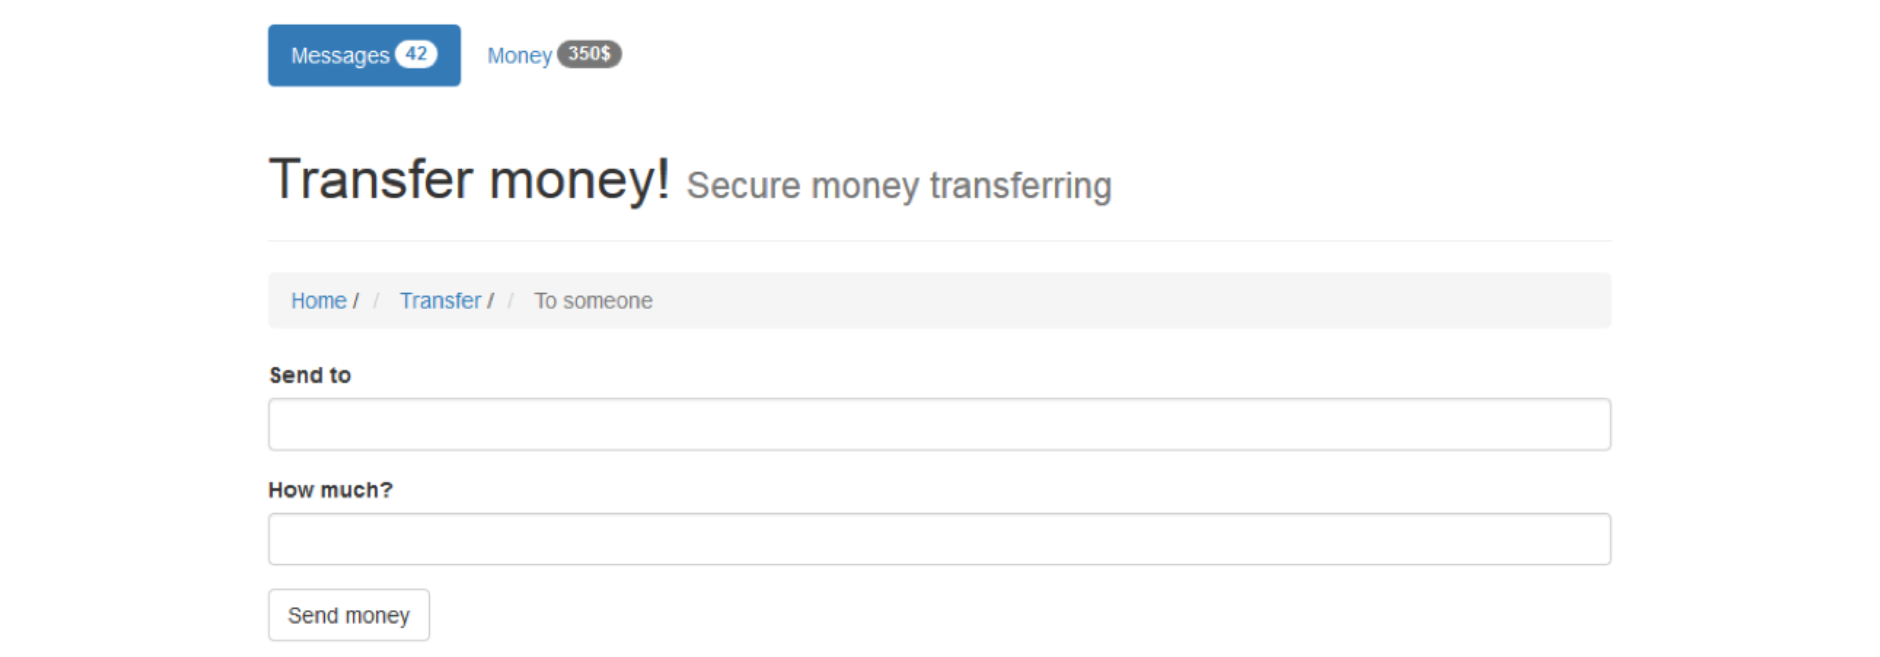 form-transferring-money-example-of-an-attack-scenario